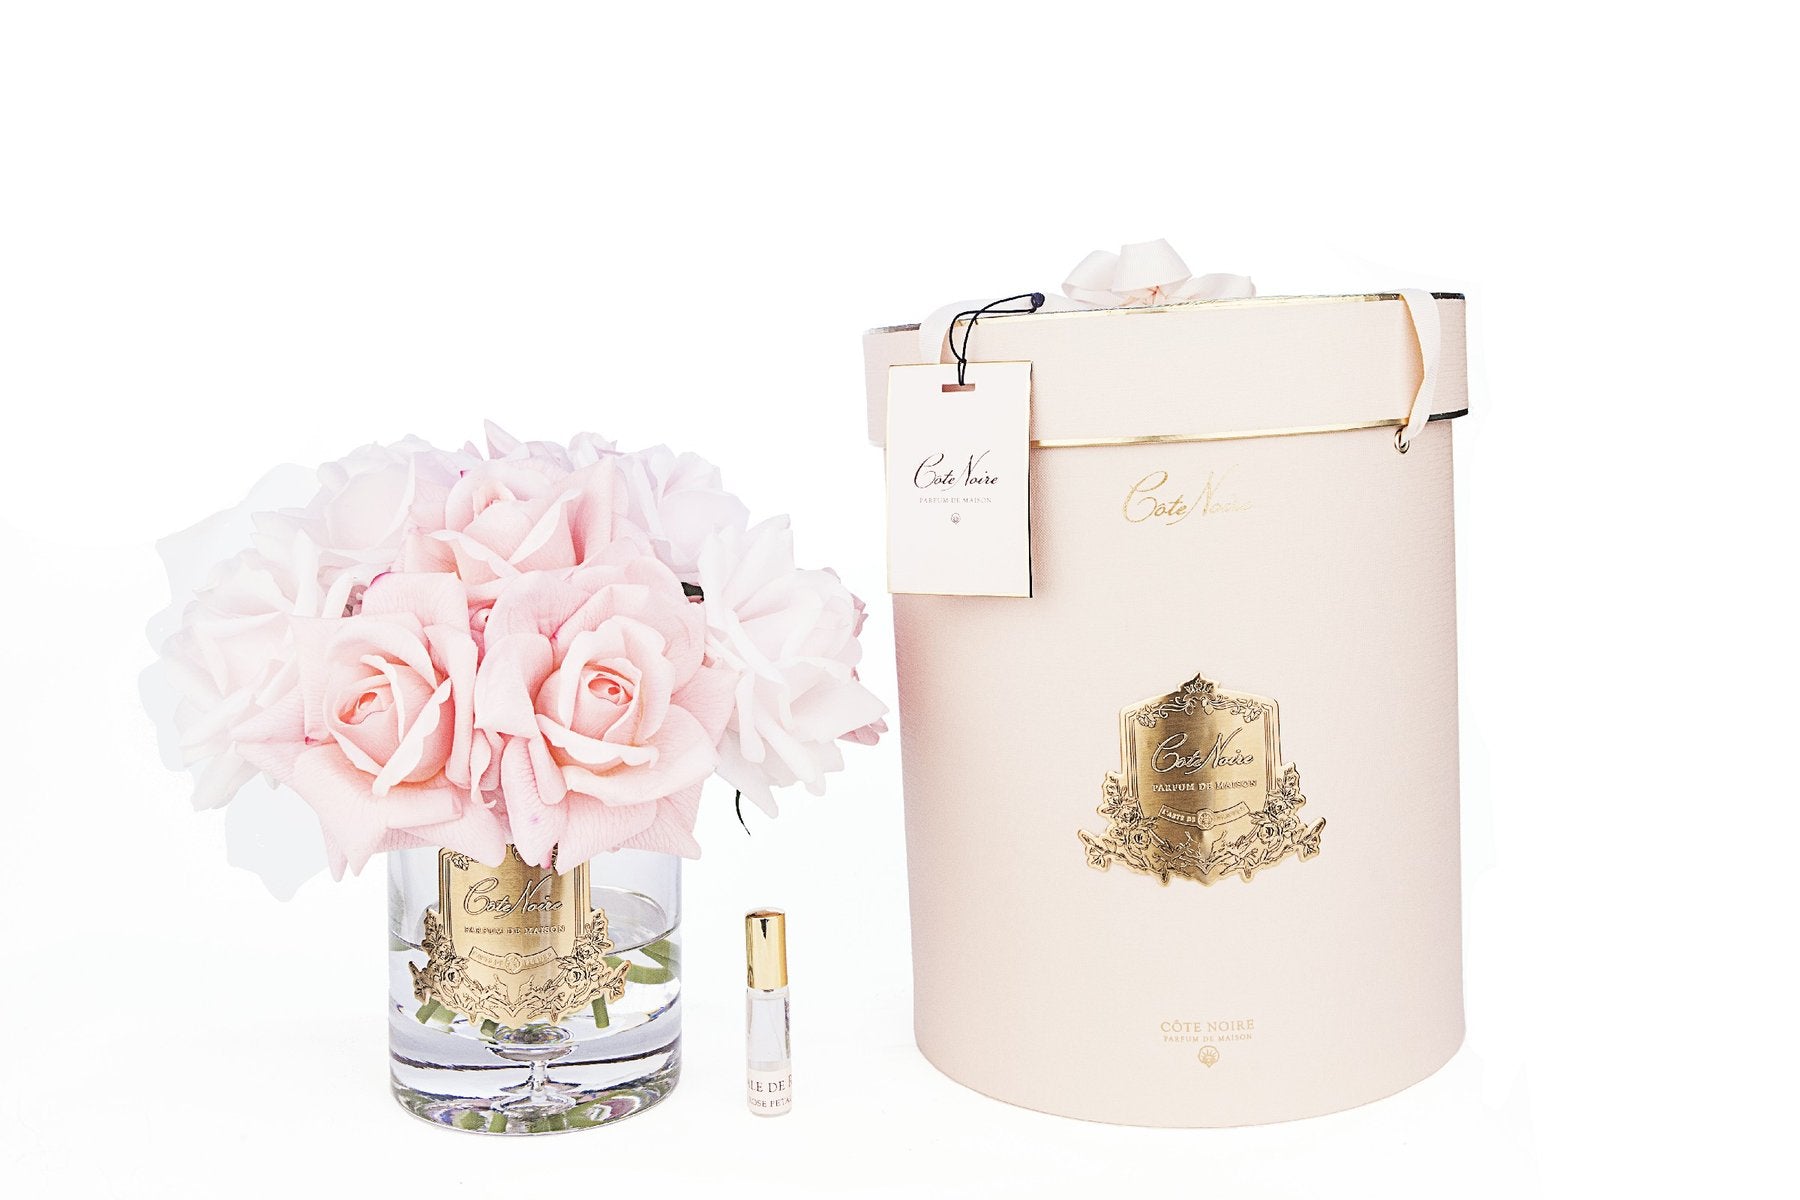 COTE NOIRE Luxury Grand Bouquet - Mixed Pinks